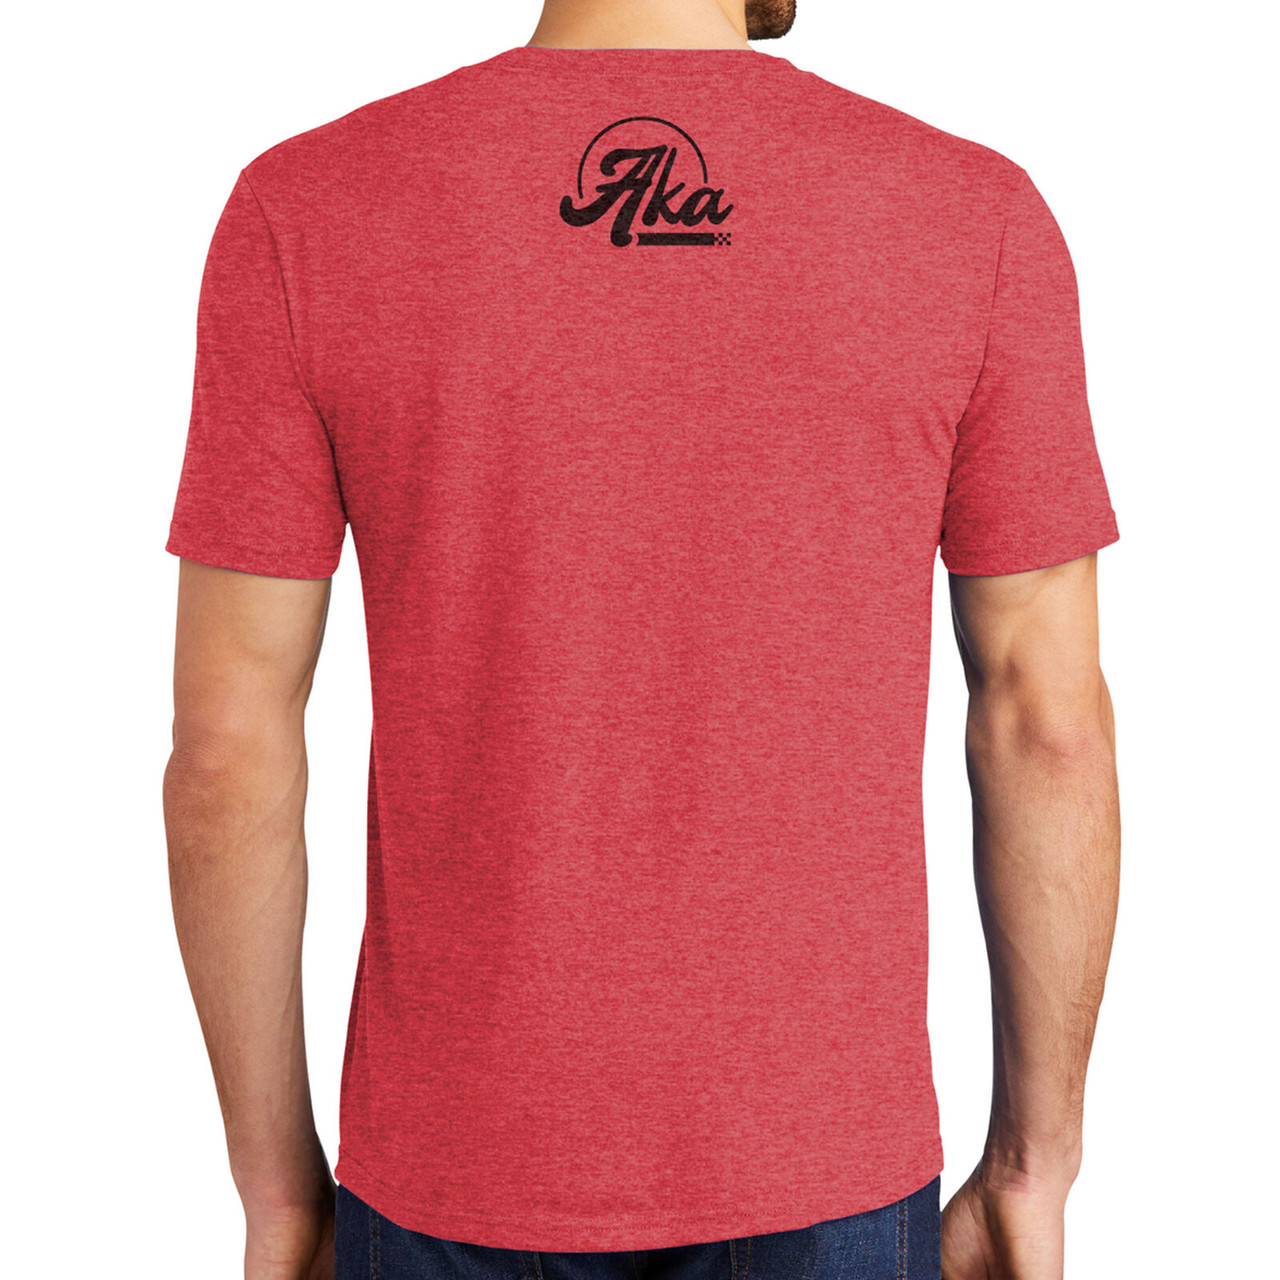 AKA Retro Tri-Blend Red T-Shirt, 2XL